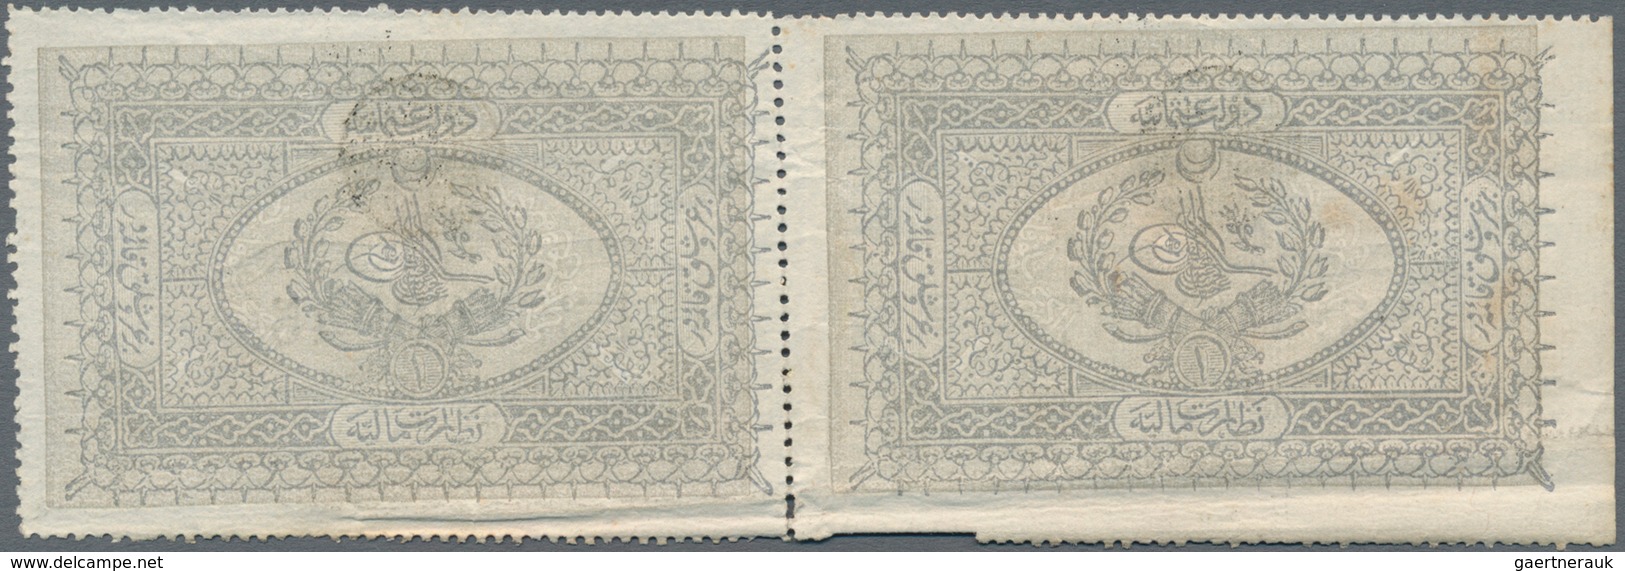 Turkey / Türkei: Banque Impériale Ottomane Uncut Pair Of 1 Kurus AH 1293-1295 (1876-78), P.46, Stain - Turkey